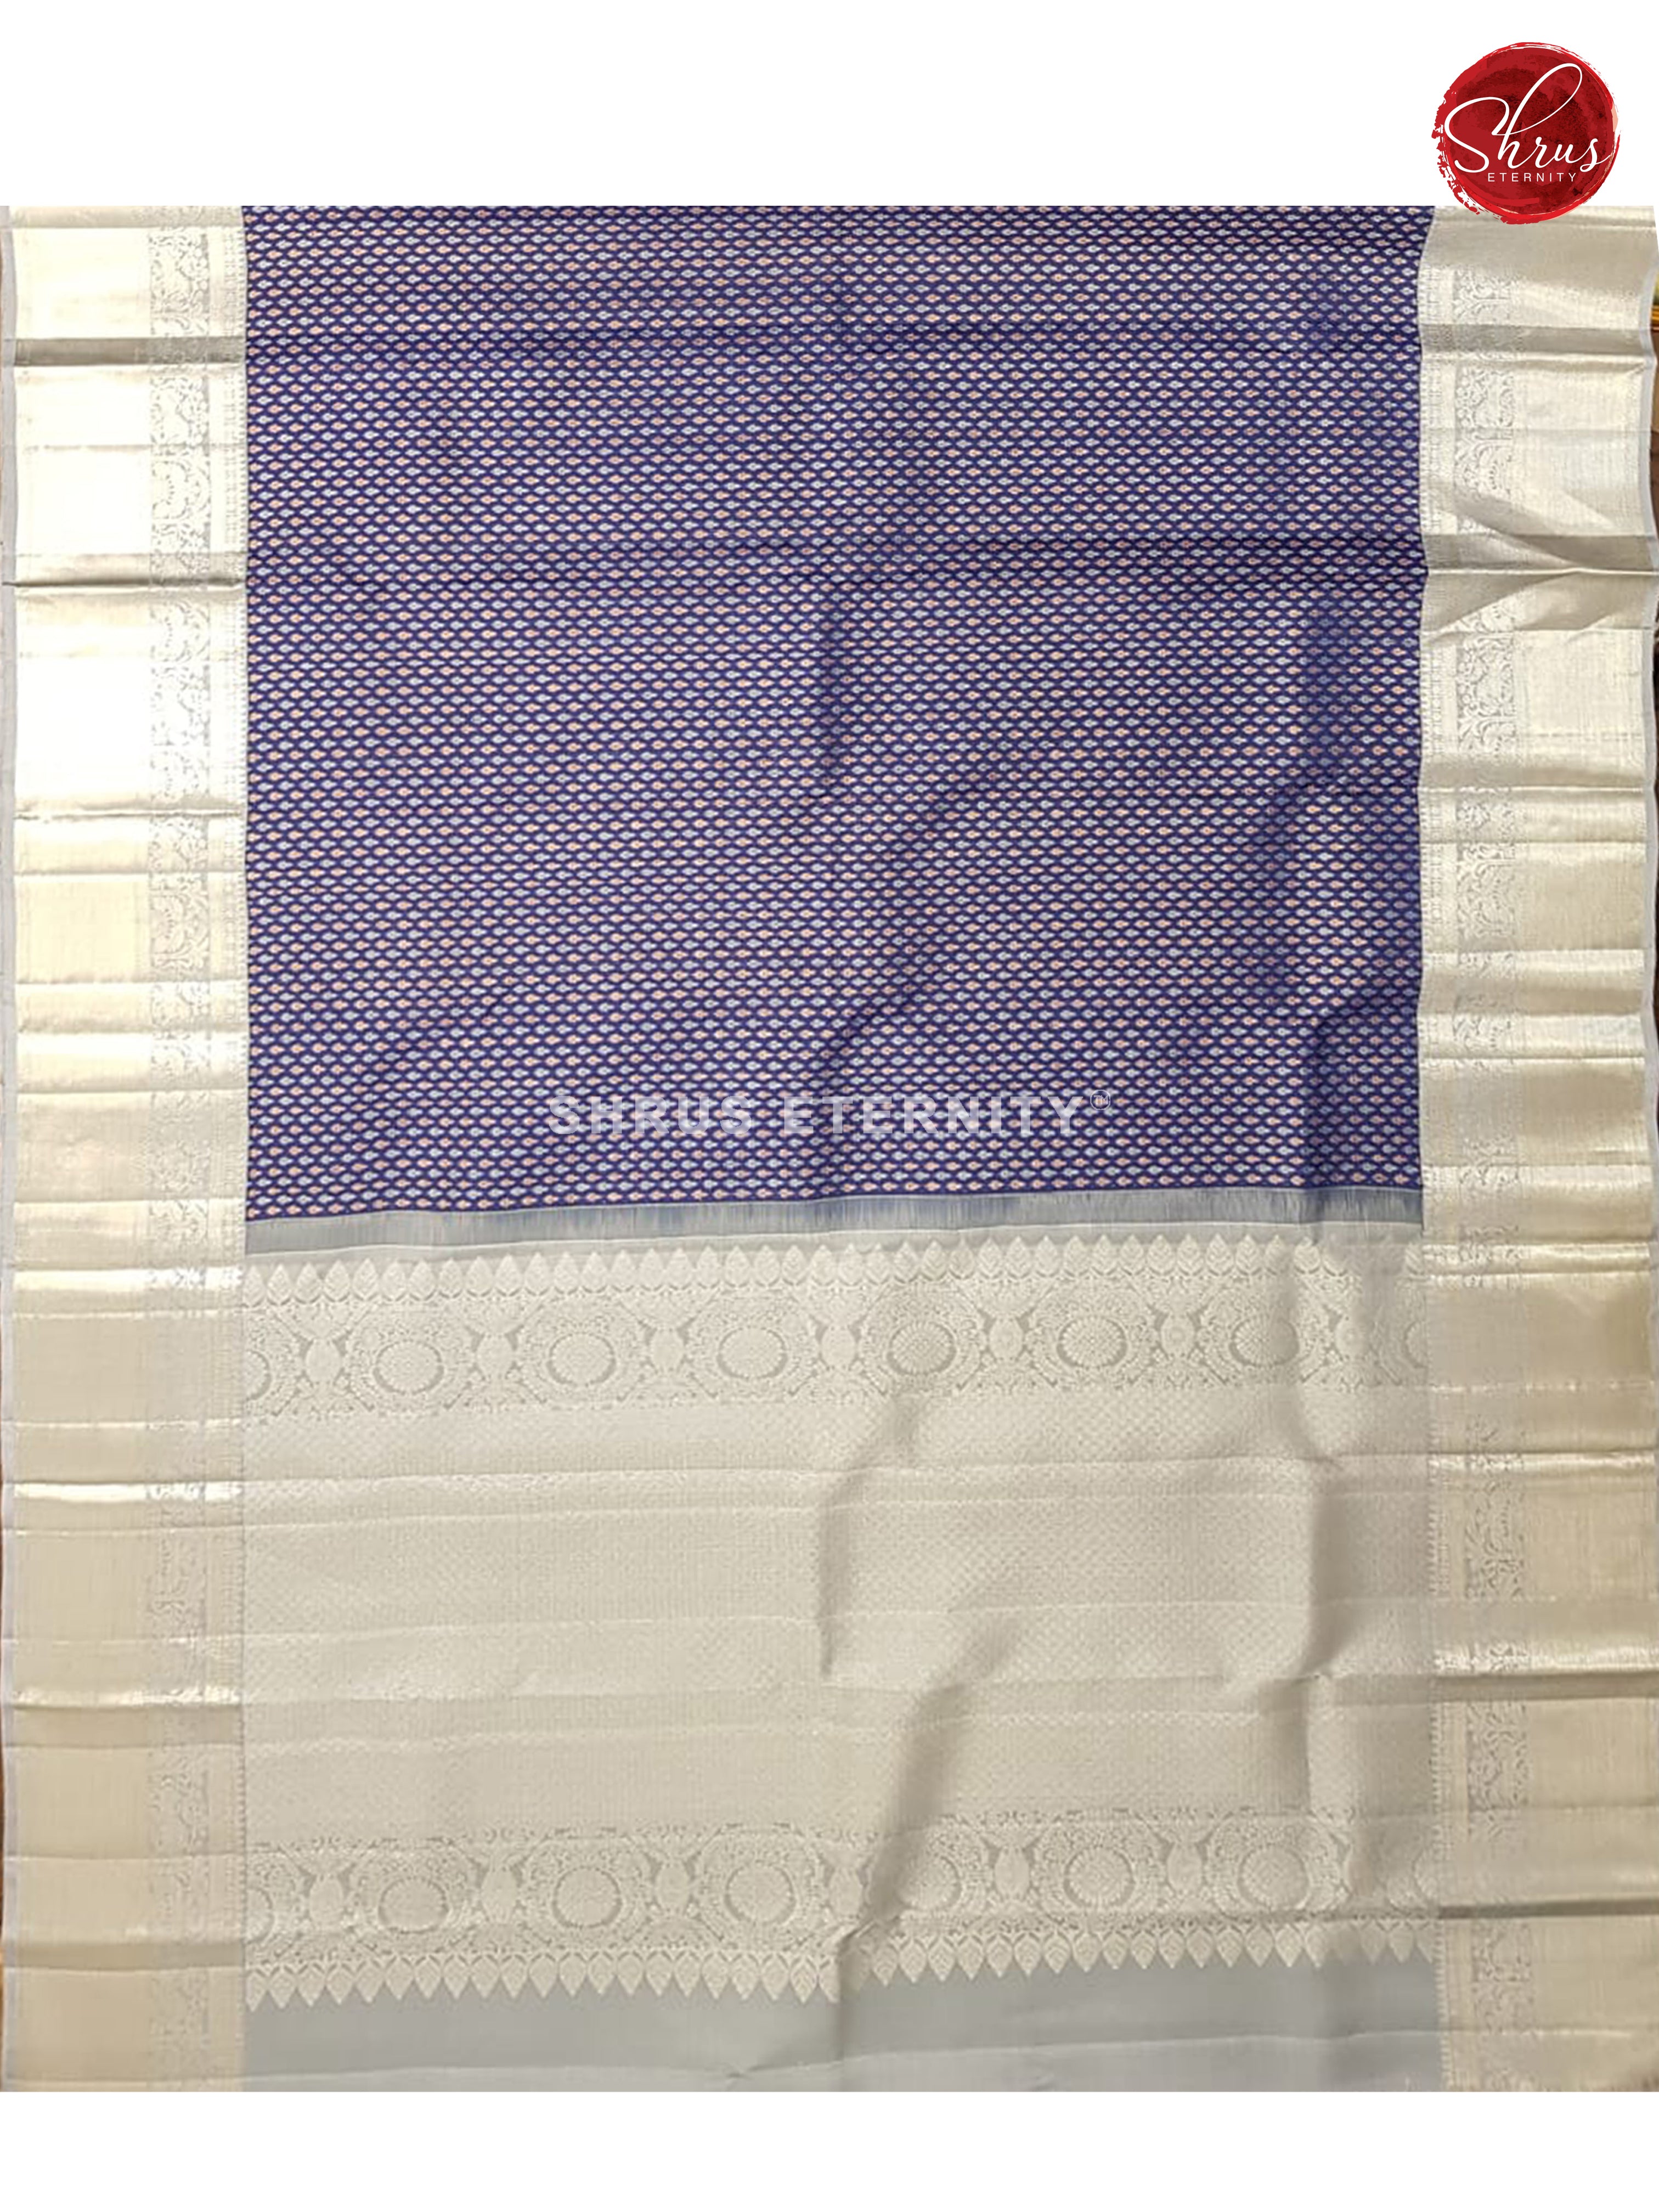 Blue & Silverish Grey - Kanchipuram Silk - Shop on ShrusEternity.com